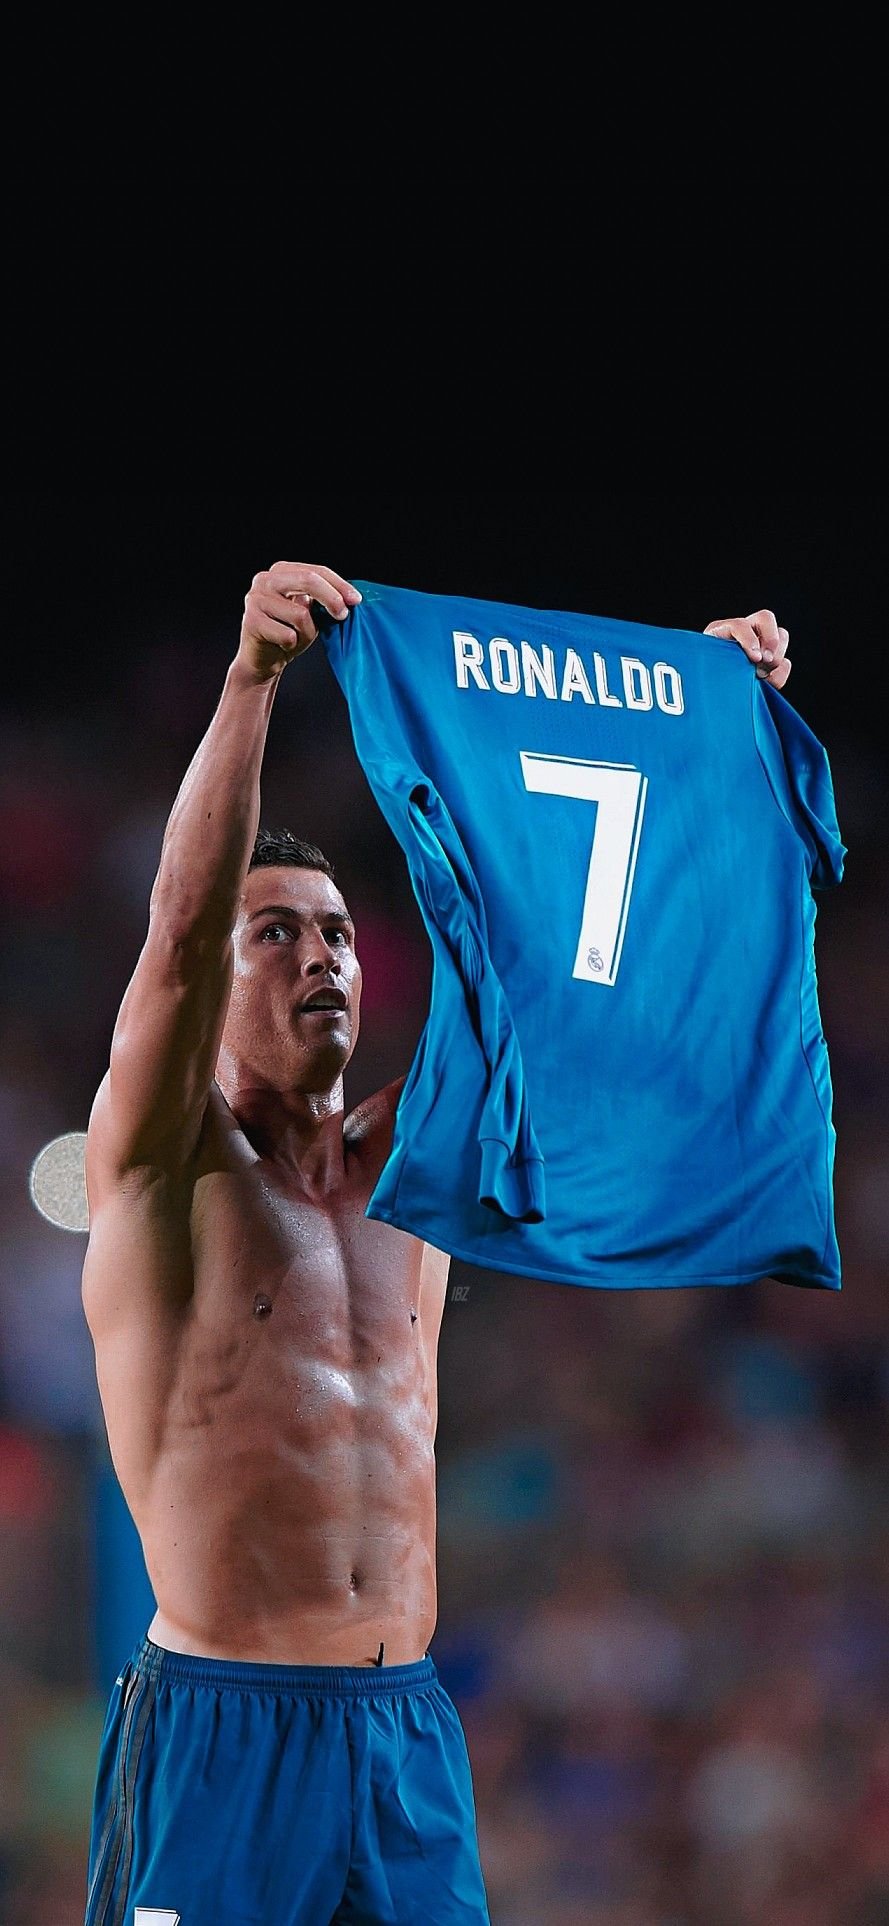 Cristiano Ronaldo Real Madrid Celebration Wallpaper